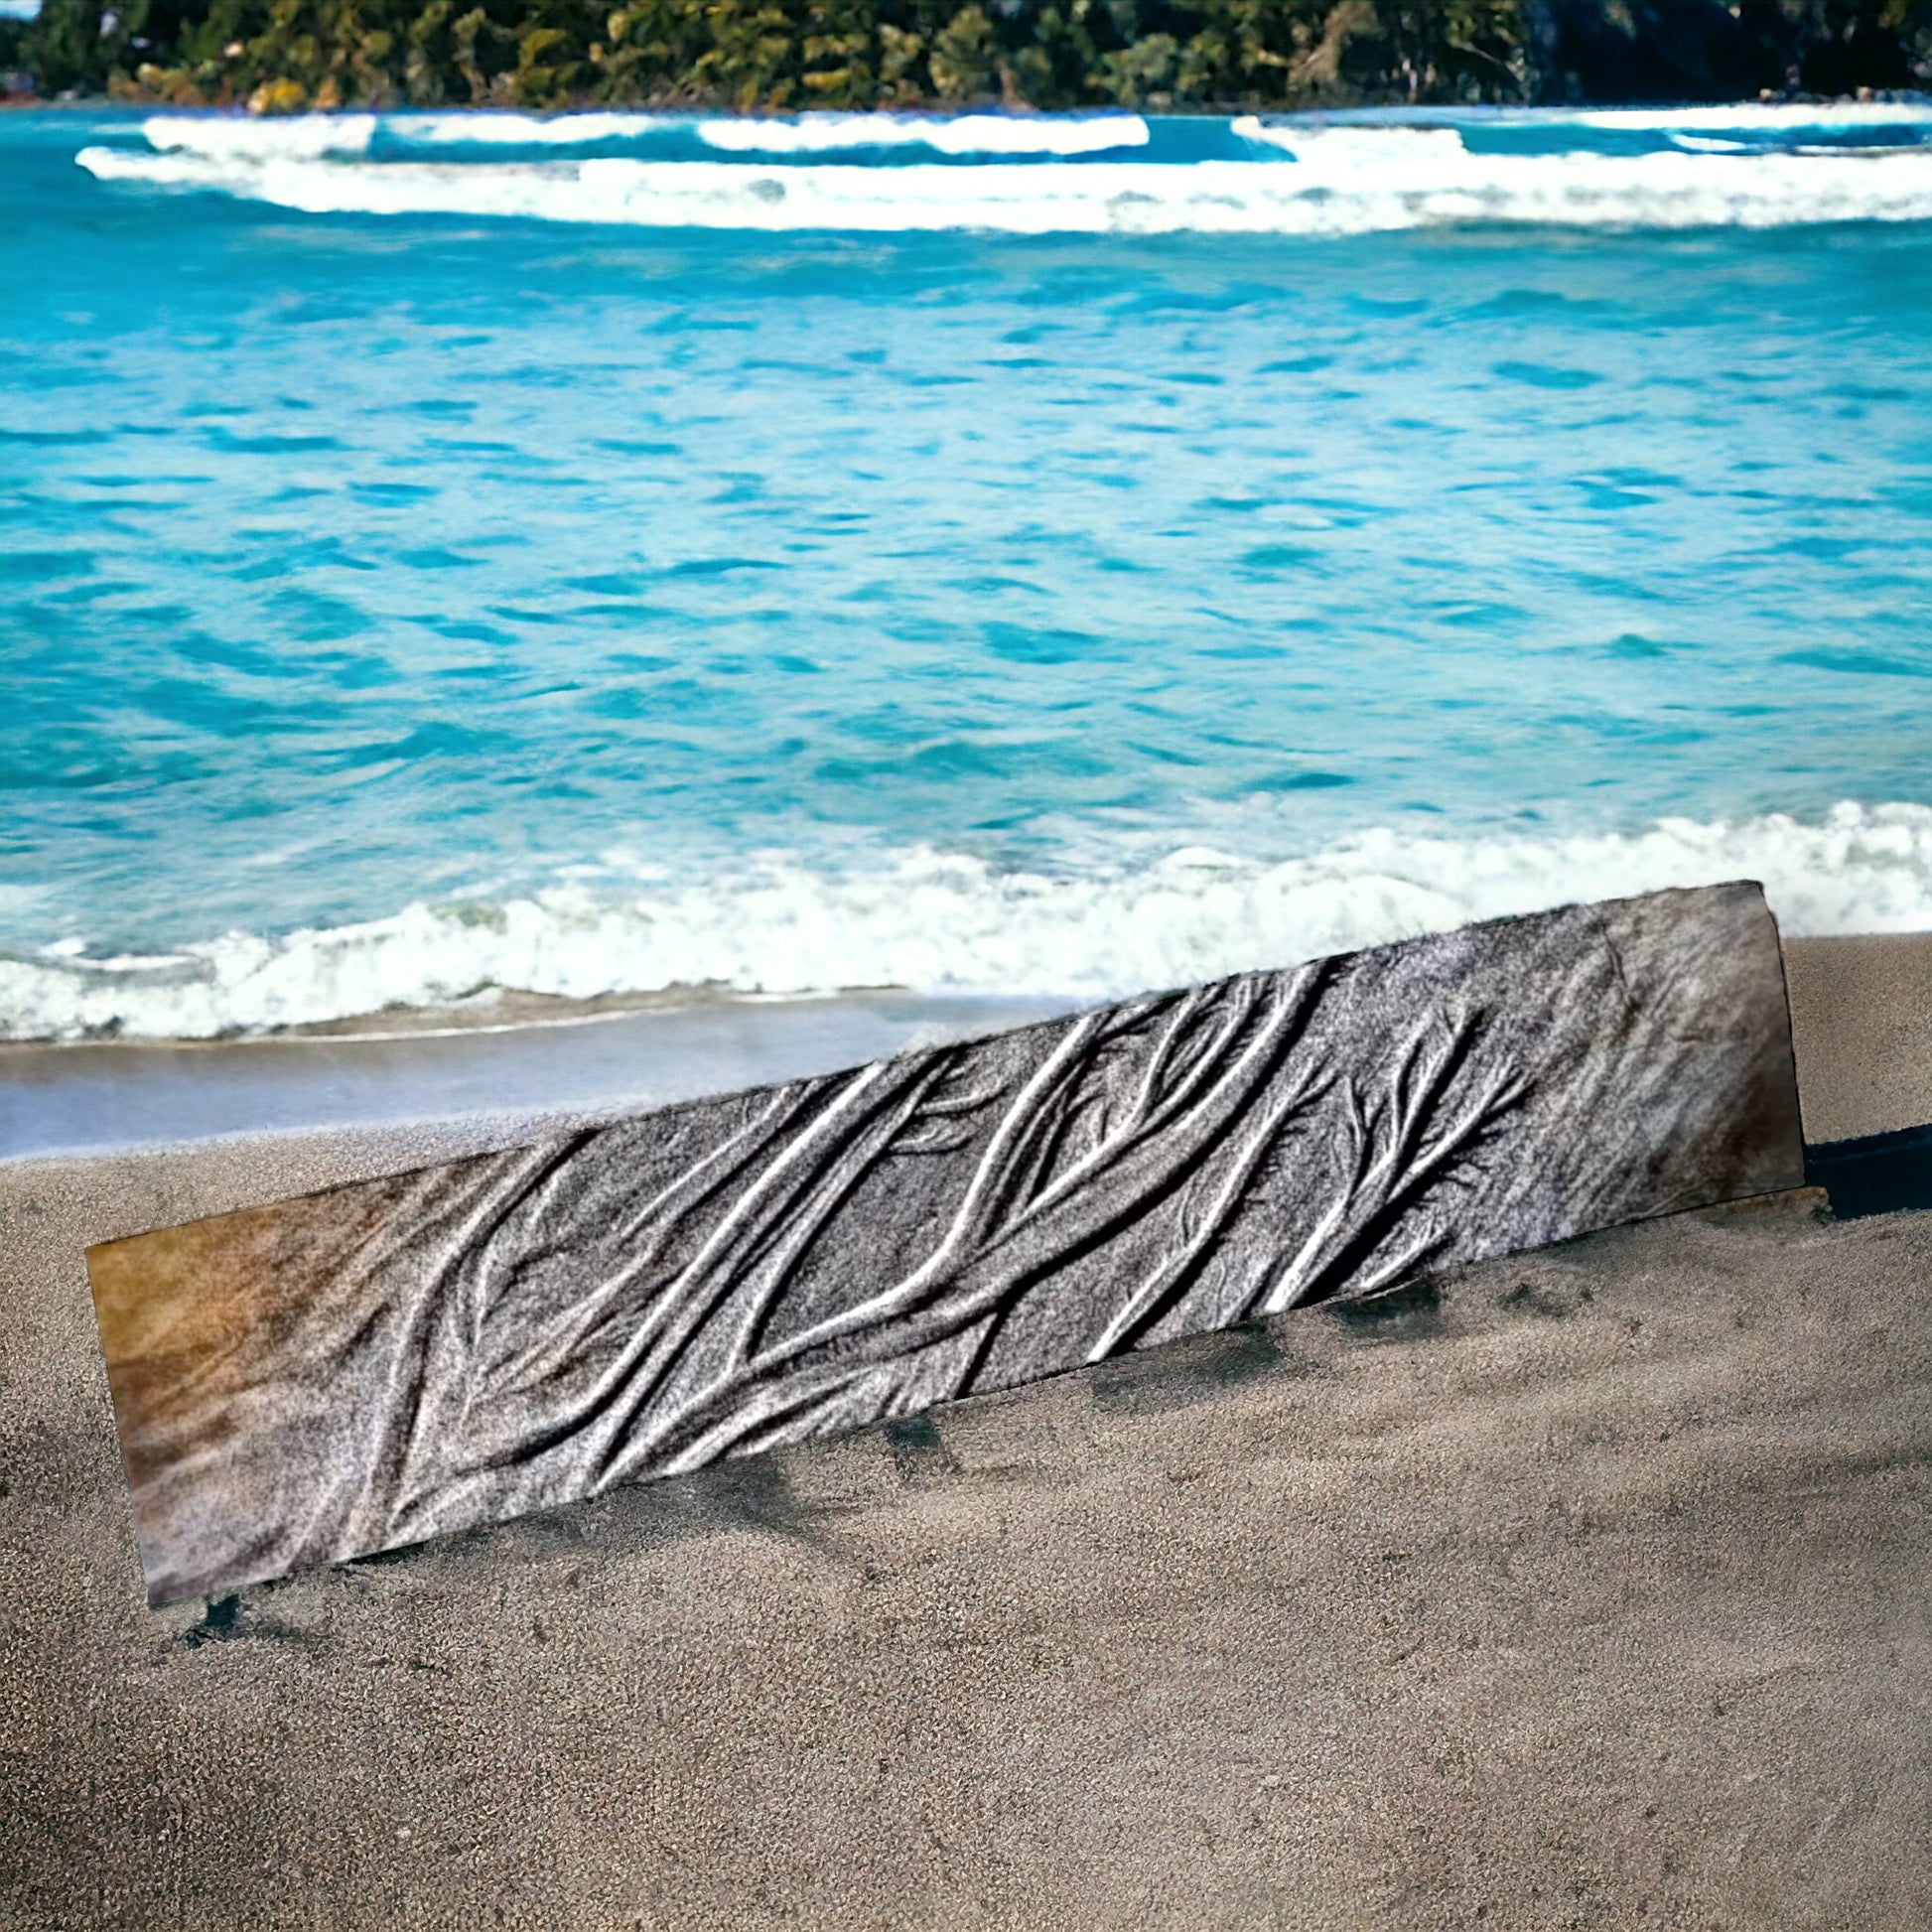 Sand Maiden long scarf shown full length on the beach.